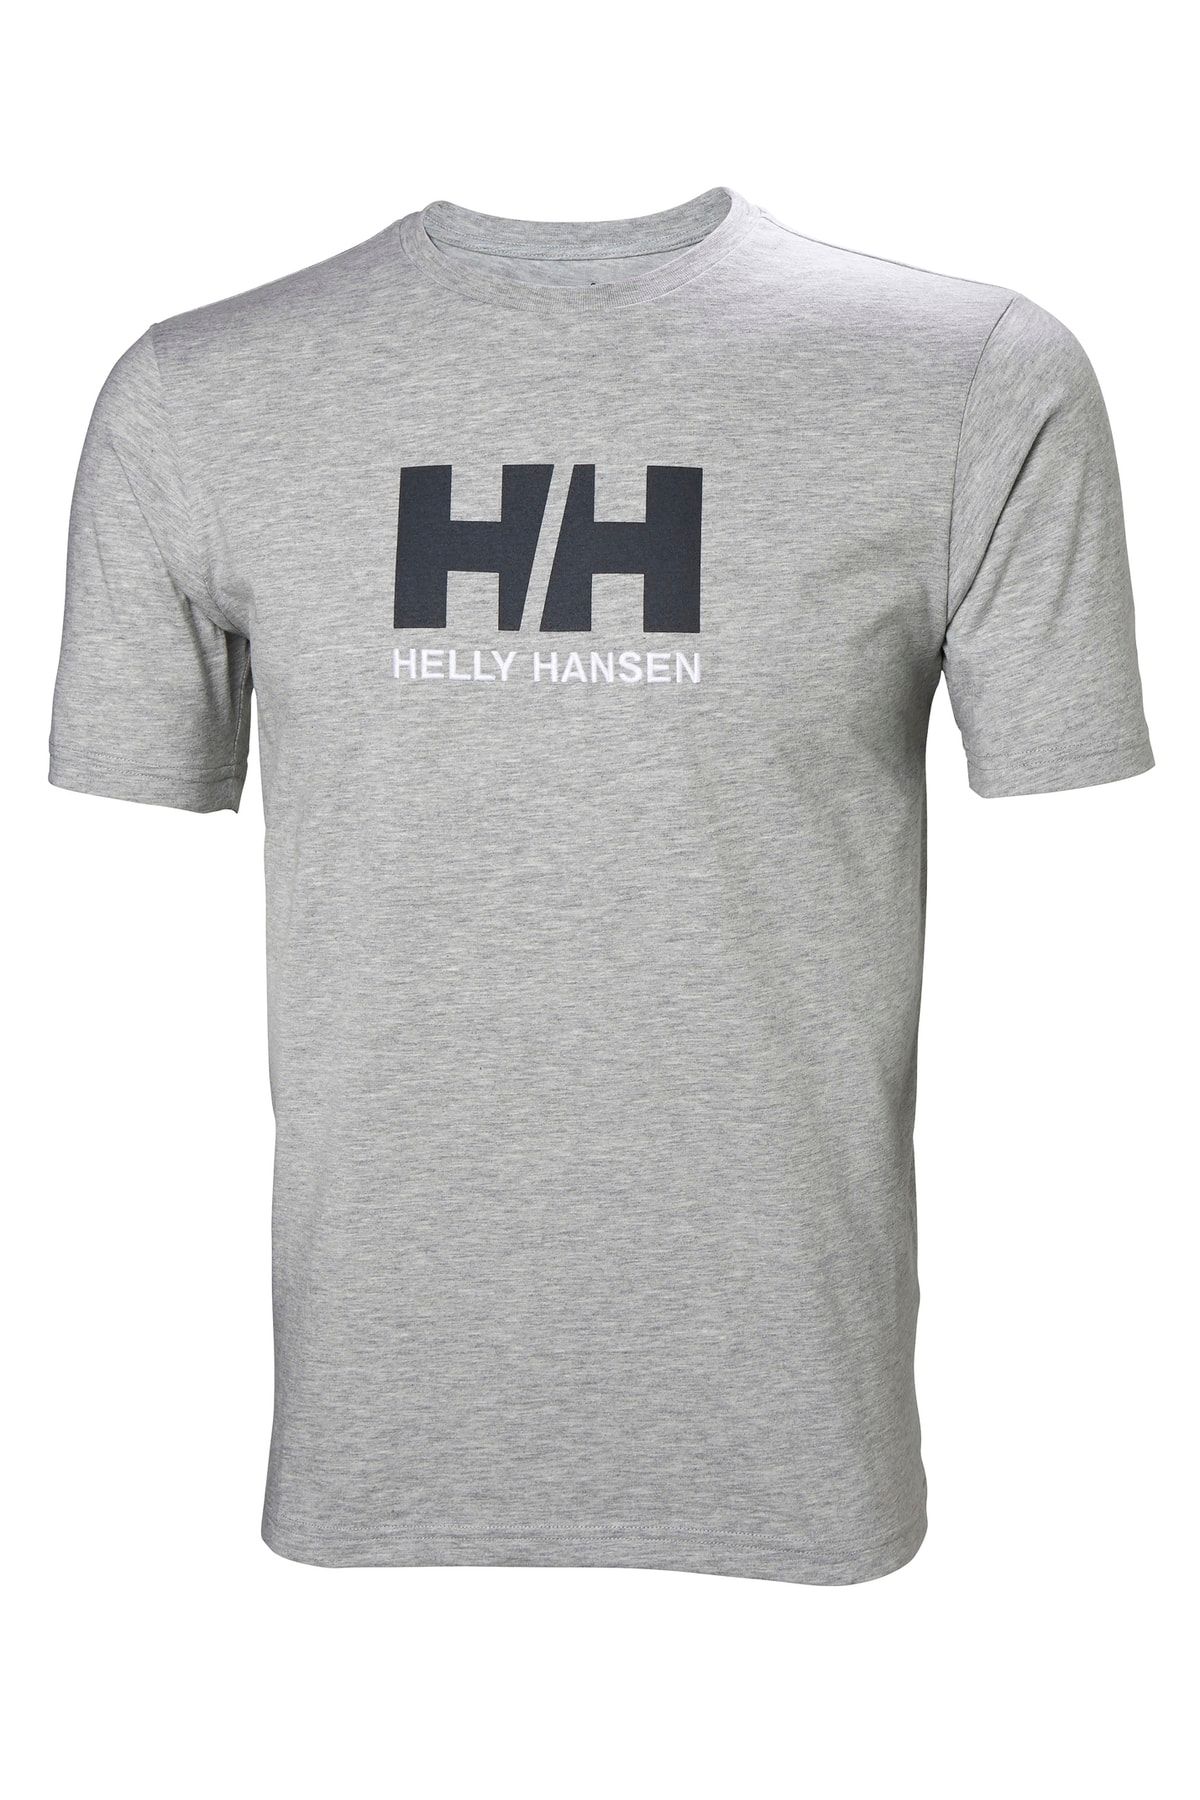 Helly Hansen Hh Hh Logo T-shırt Grey Melange